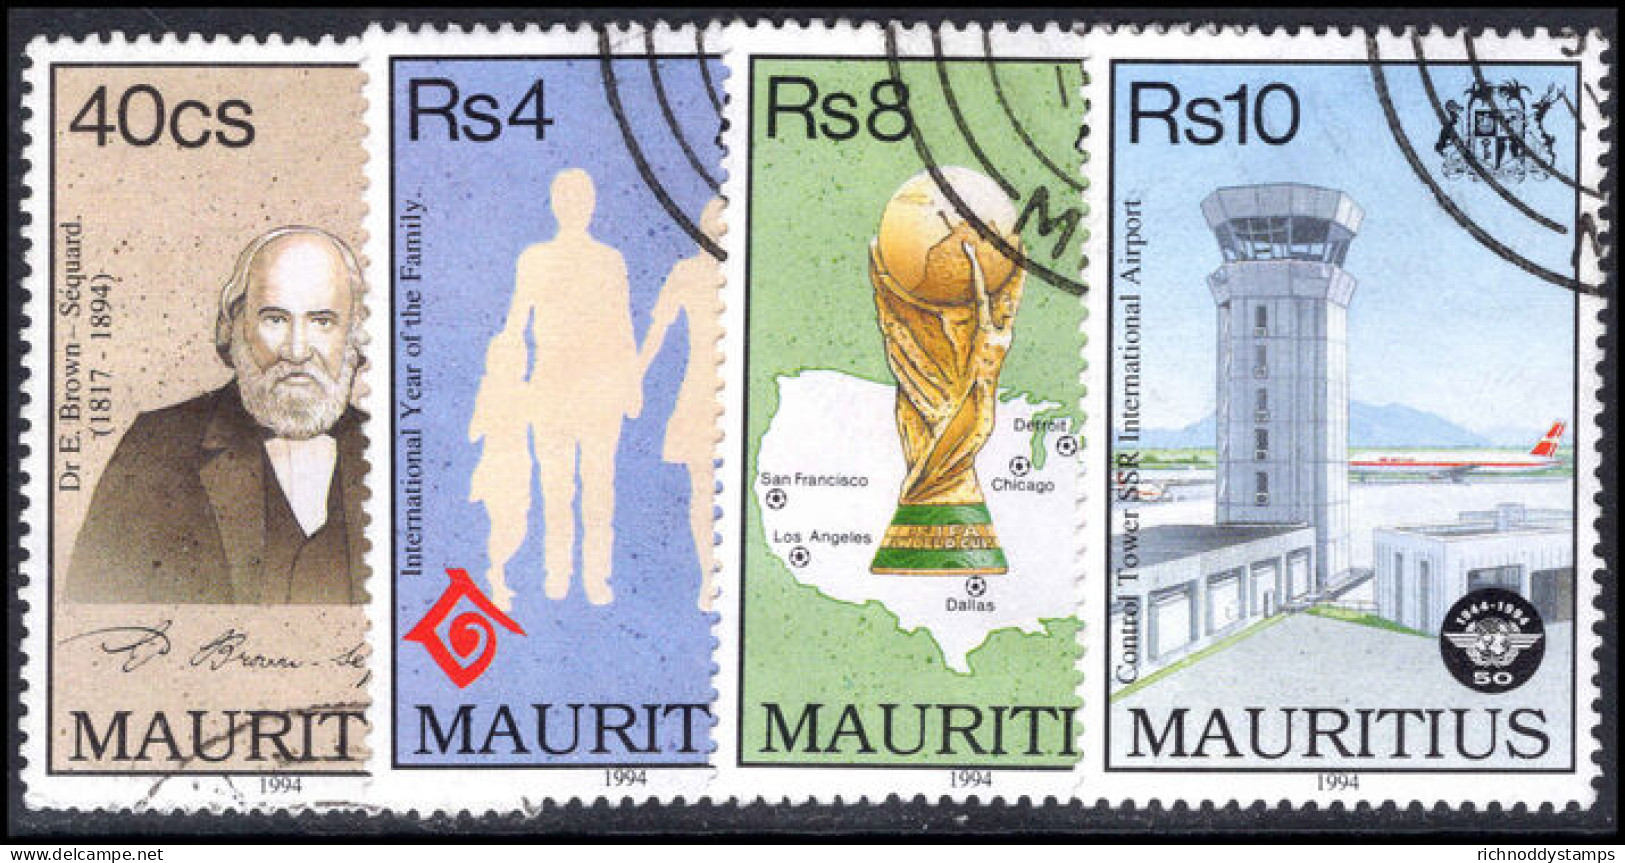 Mauritius 1994 Anniversaries And Events Fine Used. - Mauricio (1968-...)